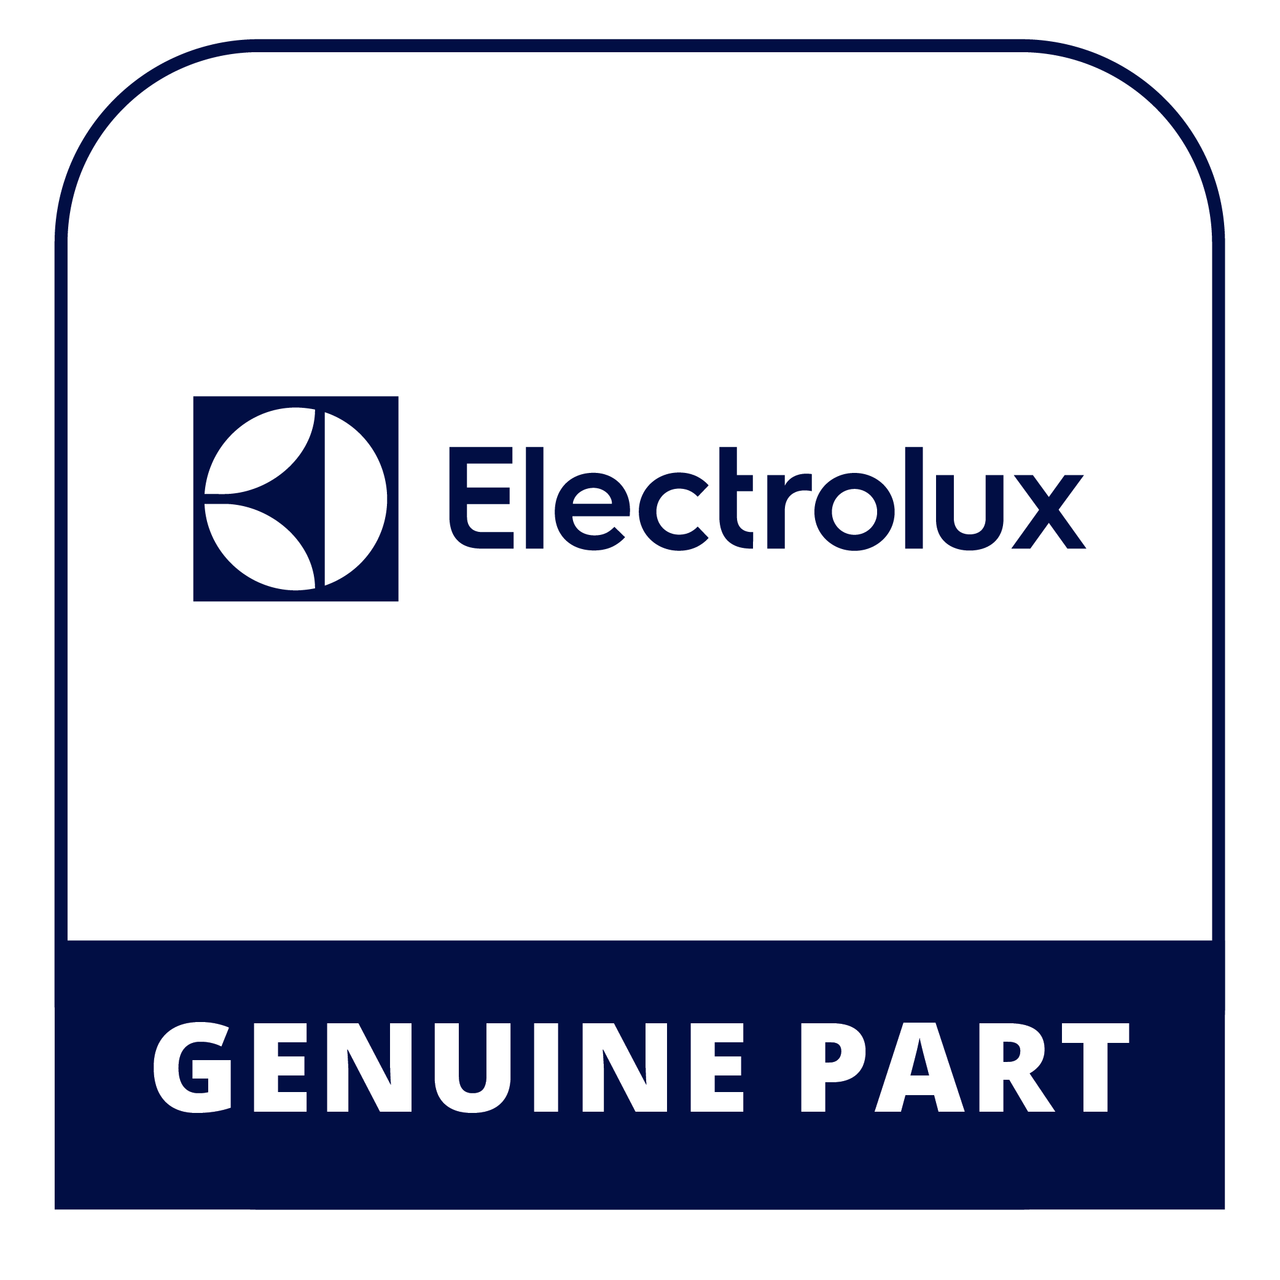 Frigidaire - Electrolux 316633012 Overlay - Genuine Electrolux Part